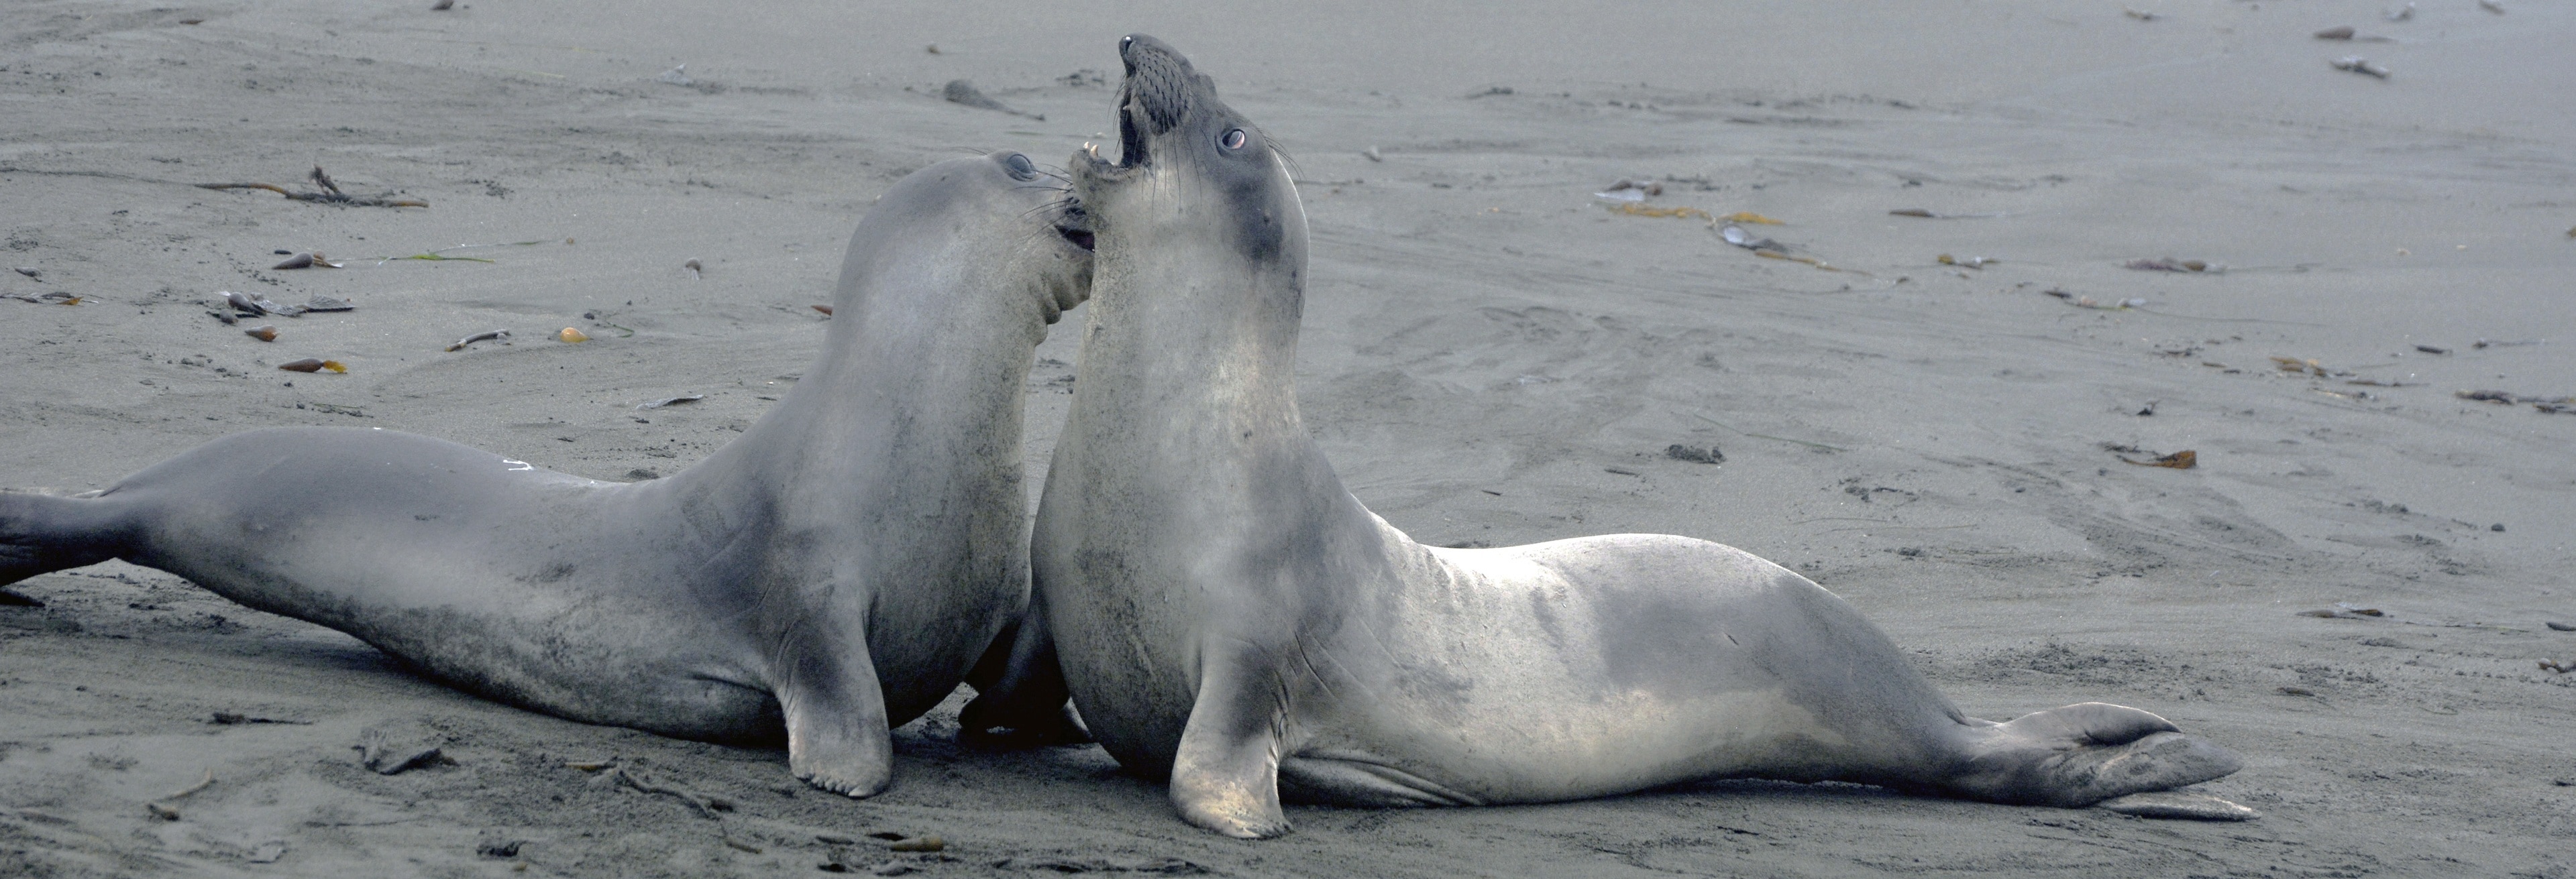 2 gray seals